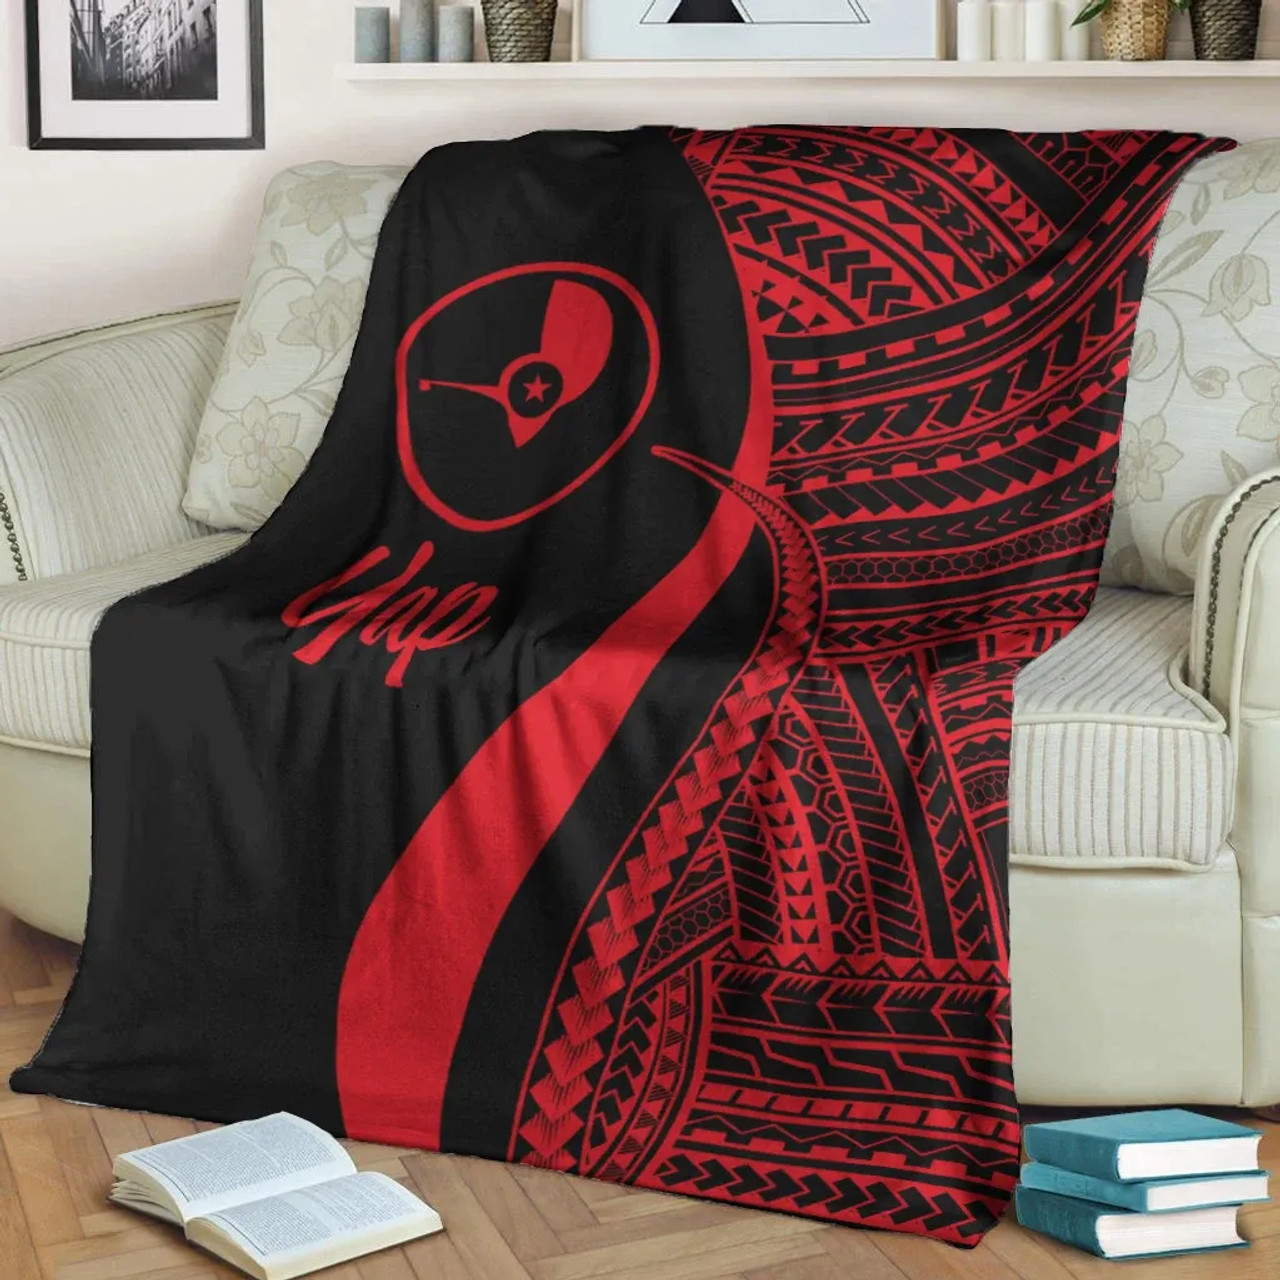 Yap Premium Blanket - Red Polynesian Tentacle Tribal Pattern 4